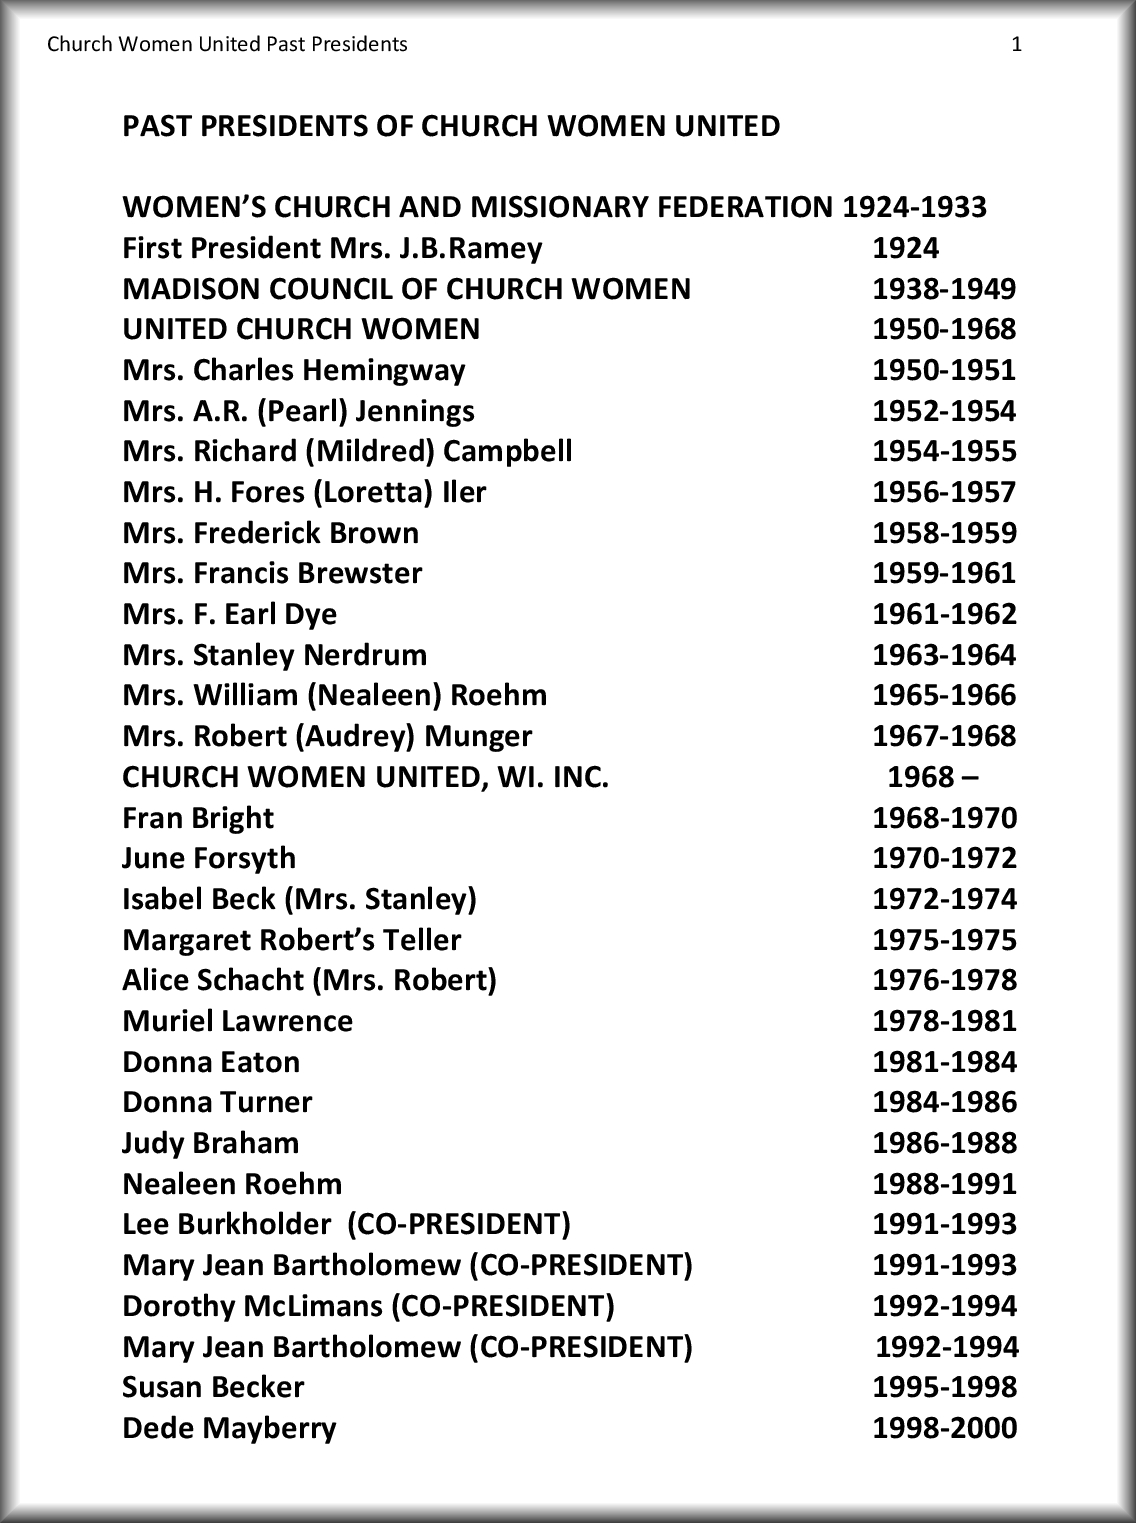 CWU Past Presidents